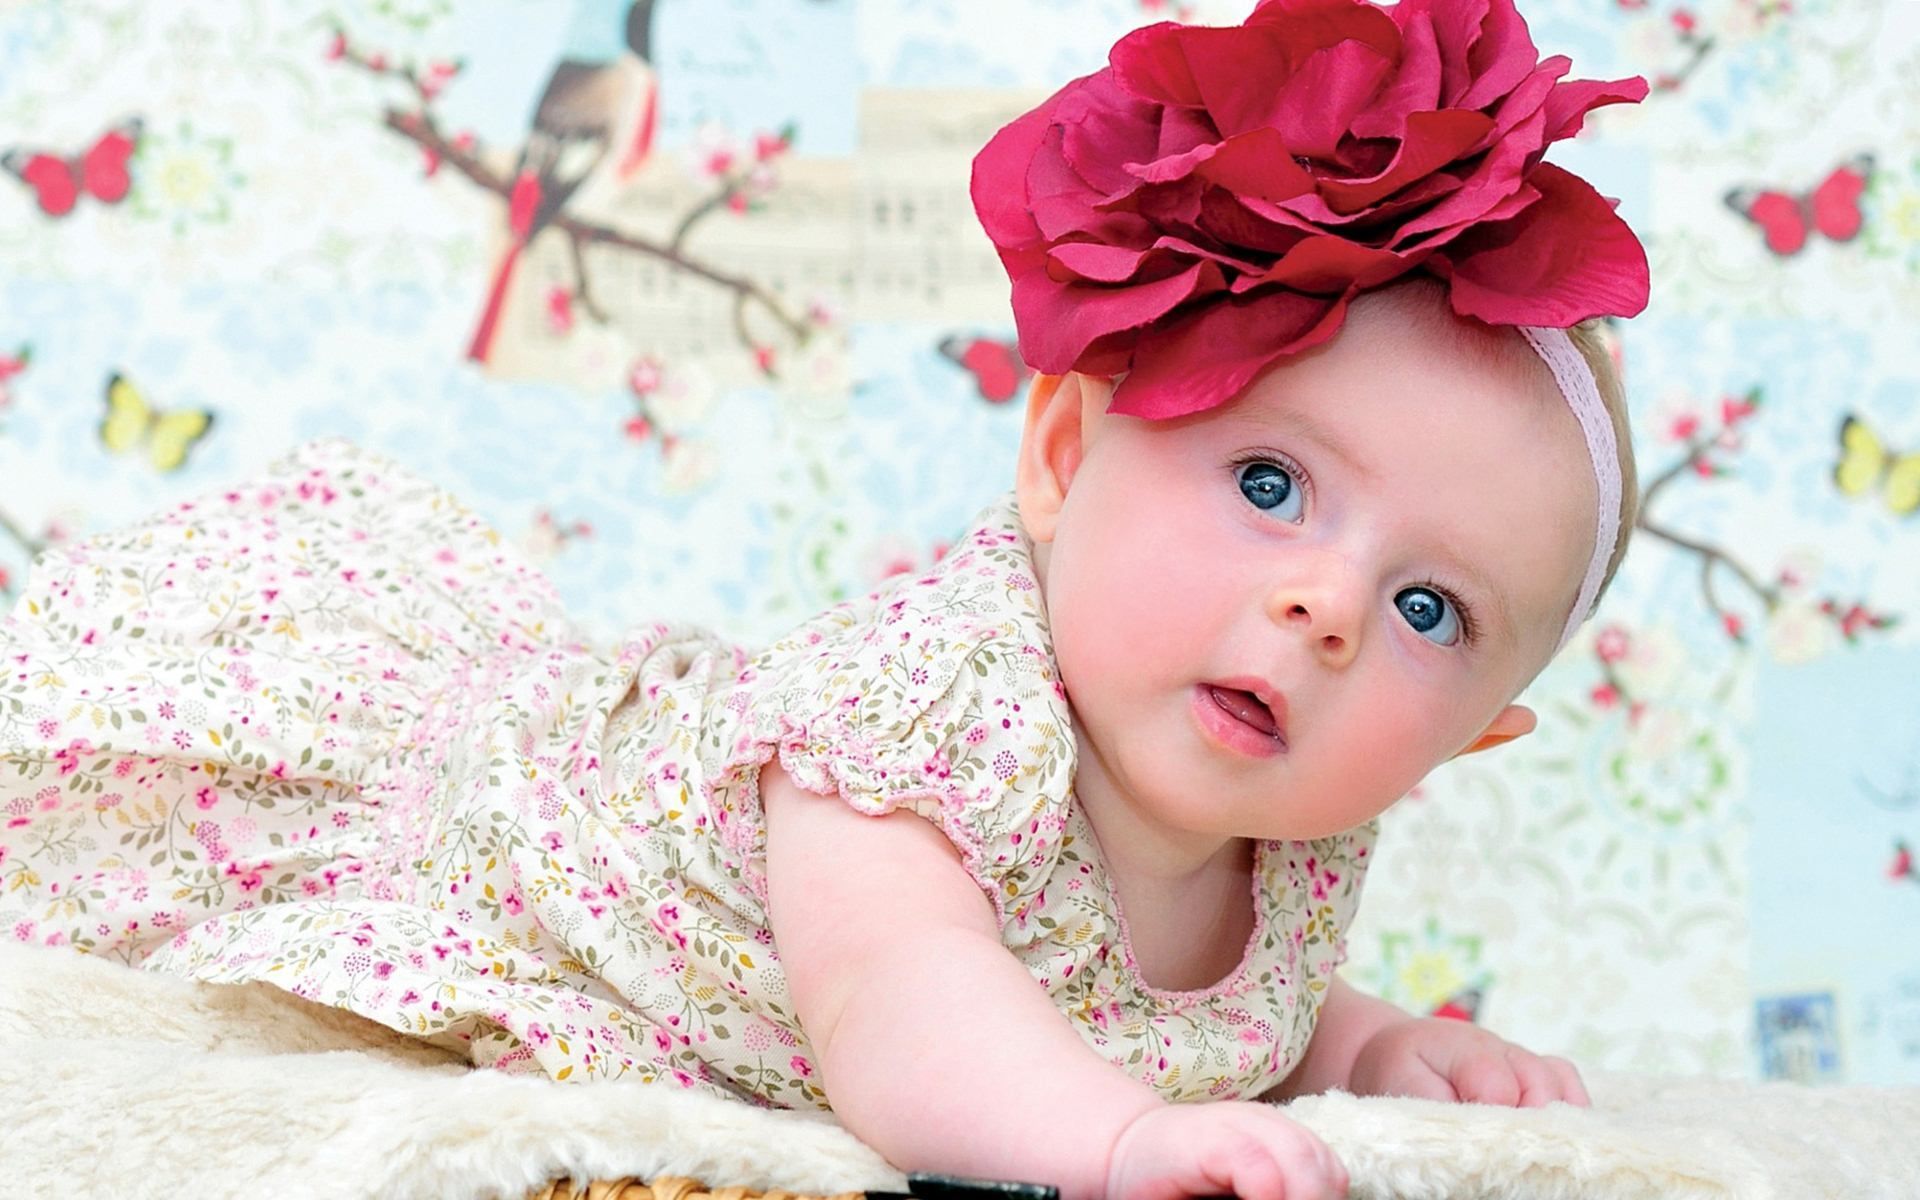 Cool Cute Baby Wallpaper Free Download For Desktop